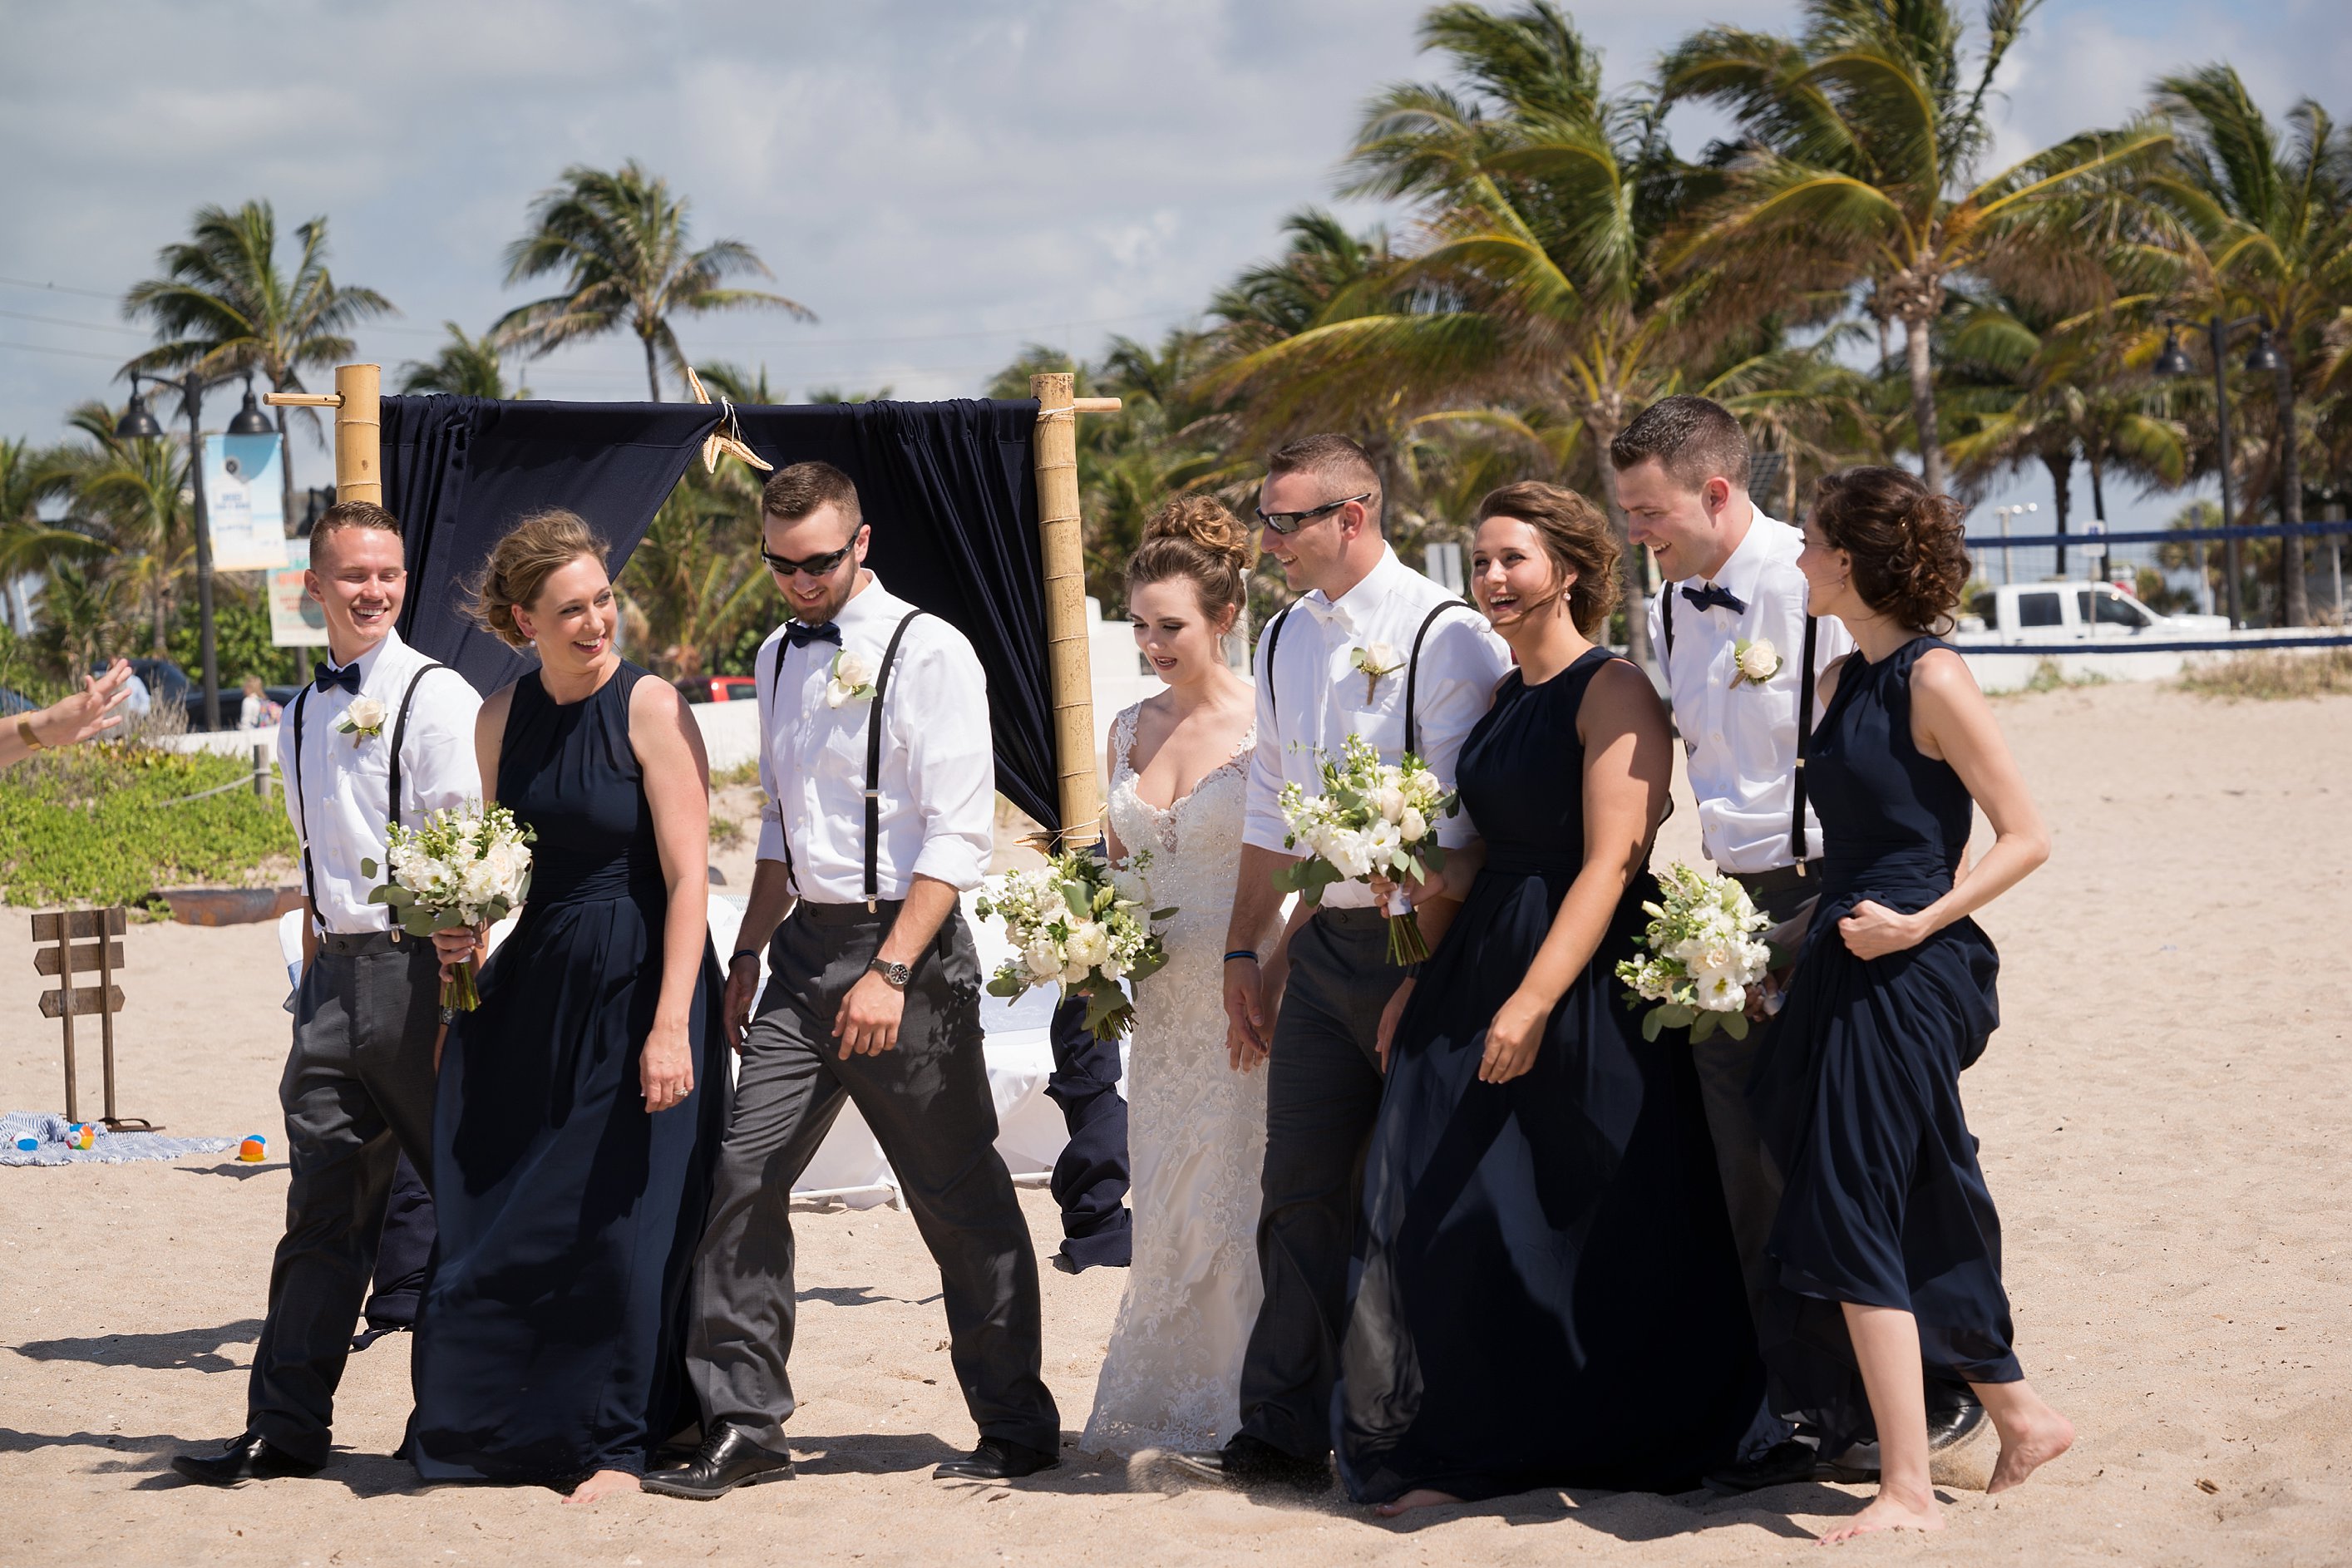 Group walking wedding photo